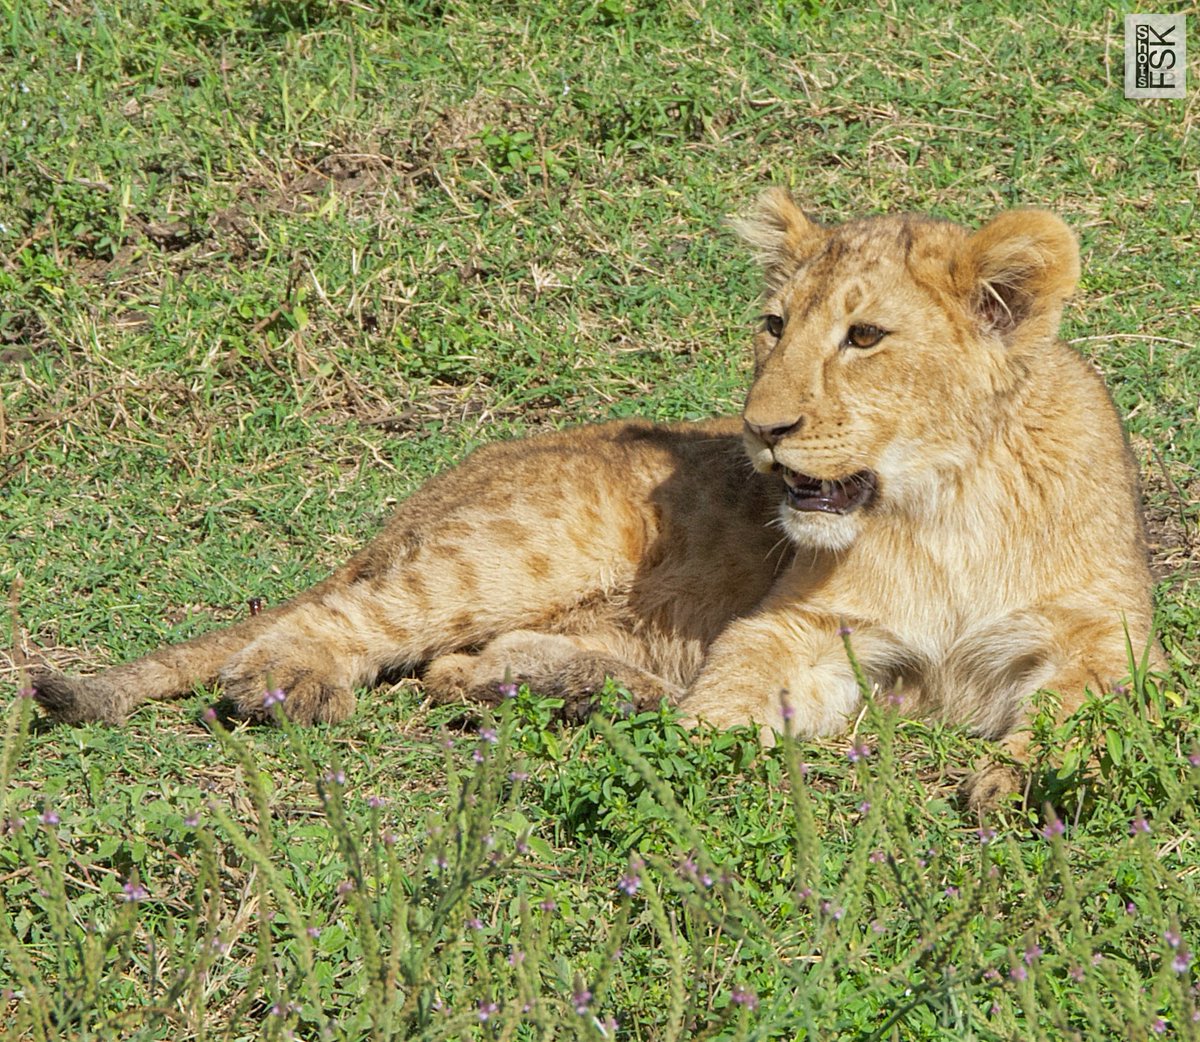 The cutest cub 🦁 #Wildlife #ProtectNature #Serengeti #ShotoniPhone @tim_cook